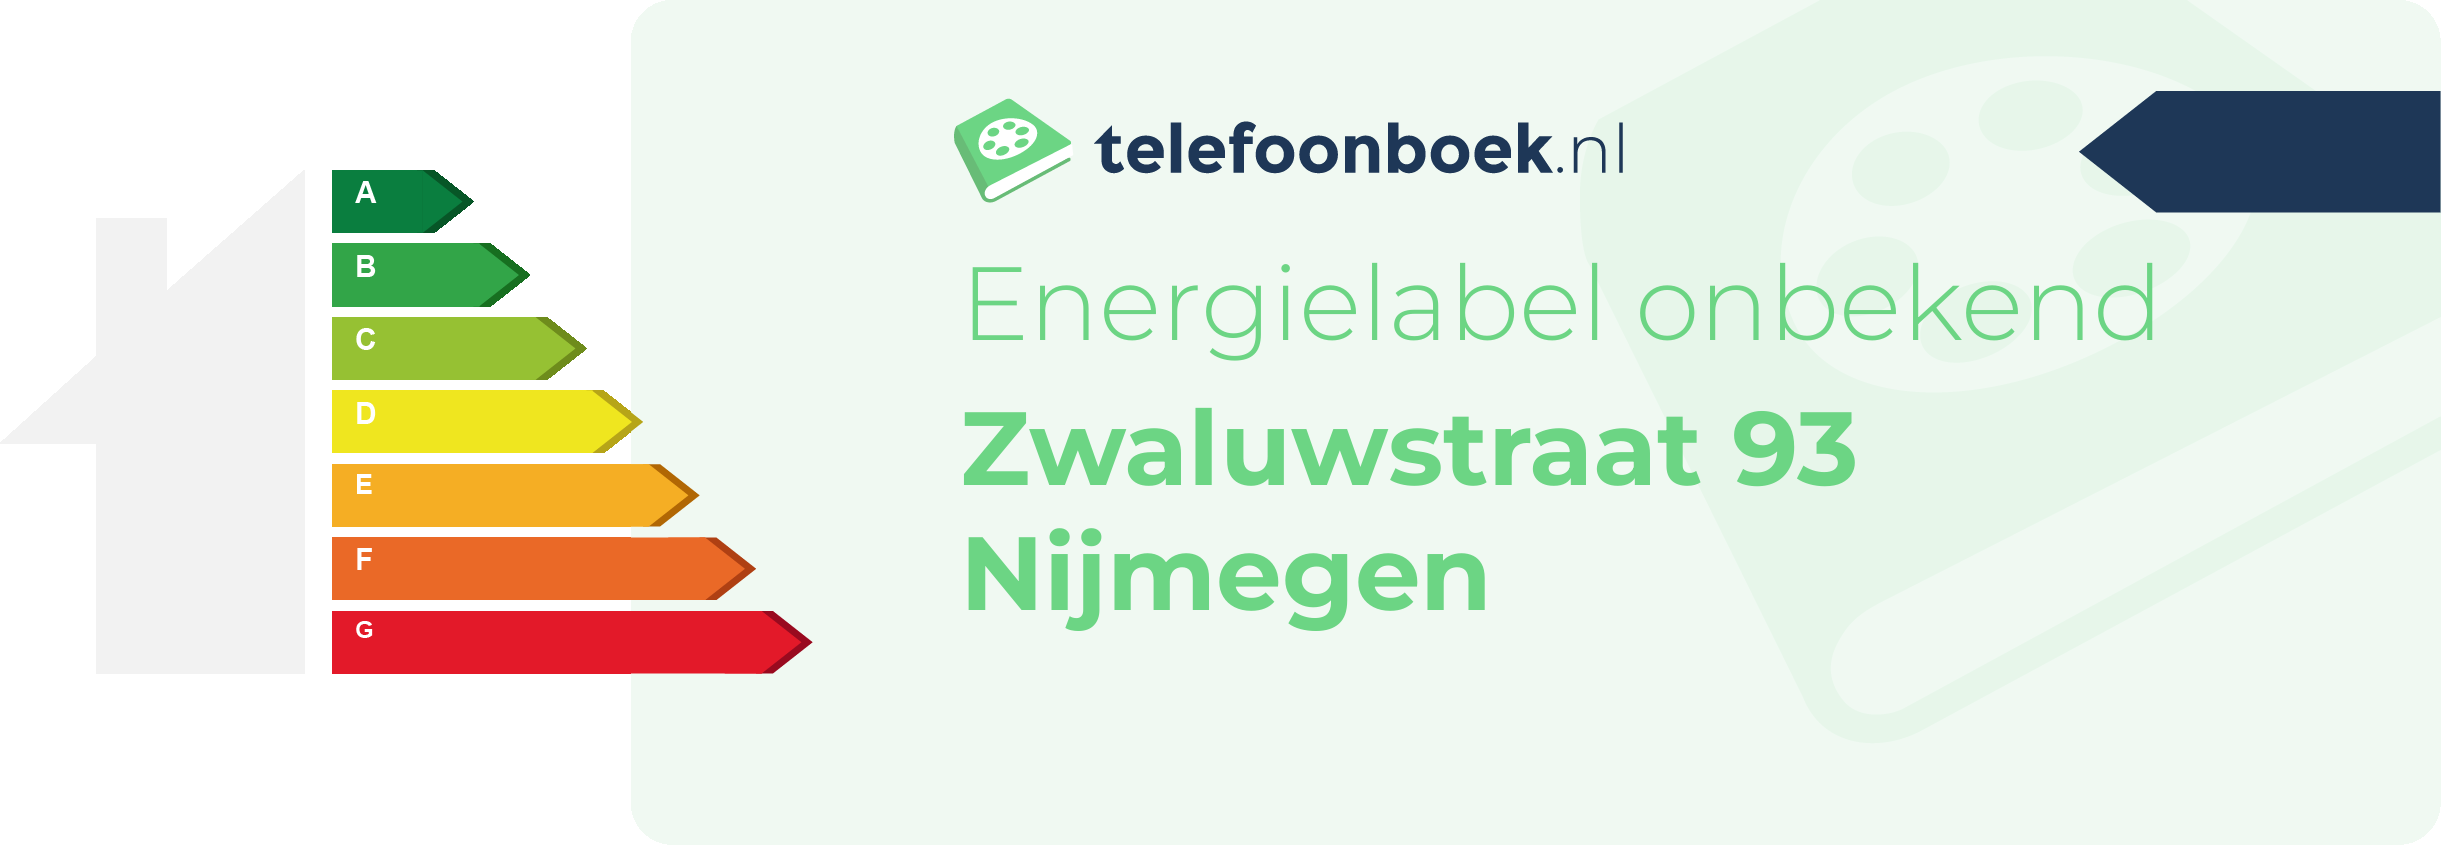 Energielabel Zwaluwstraat 93 Nijmegen